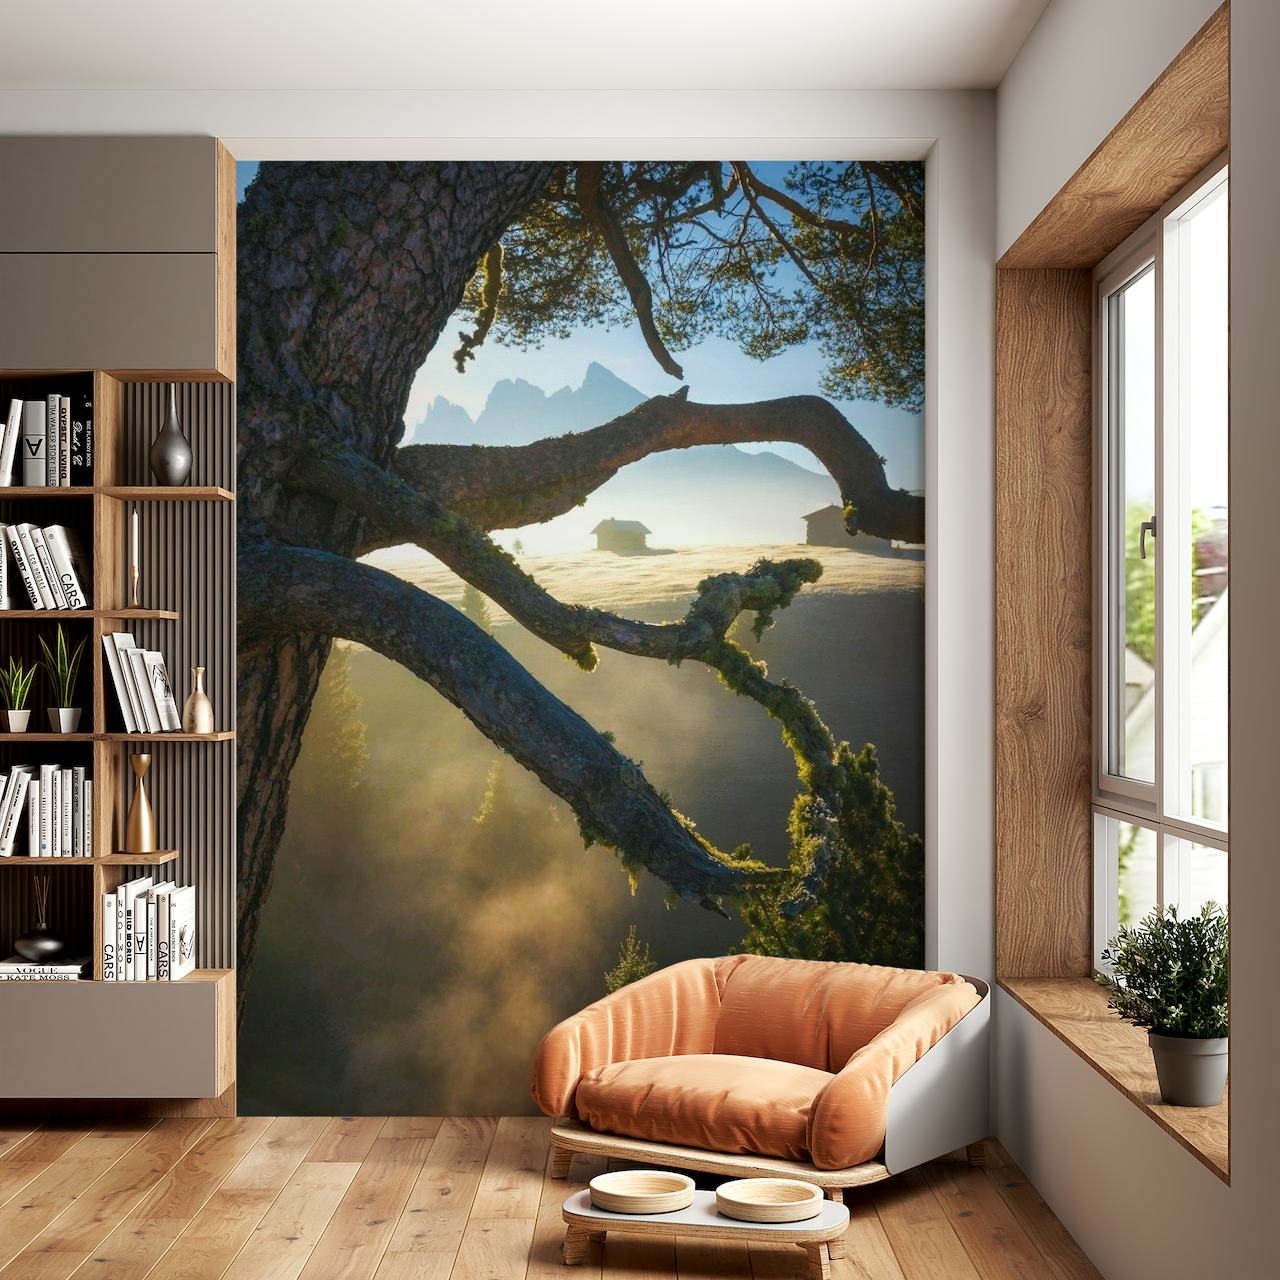 The mountain tree wallpaper